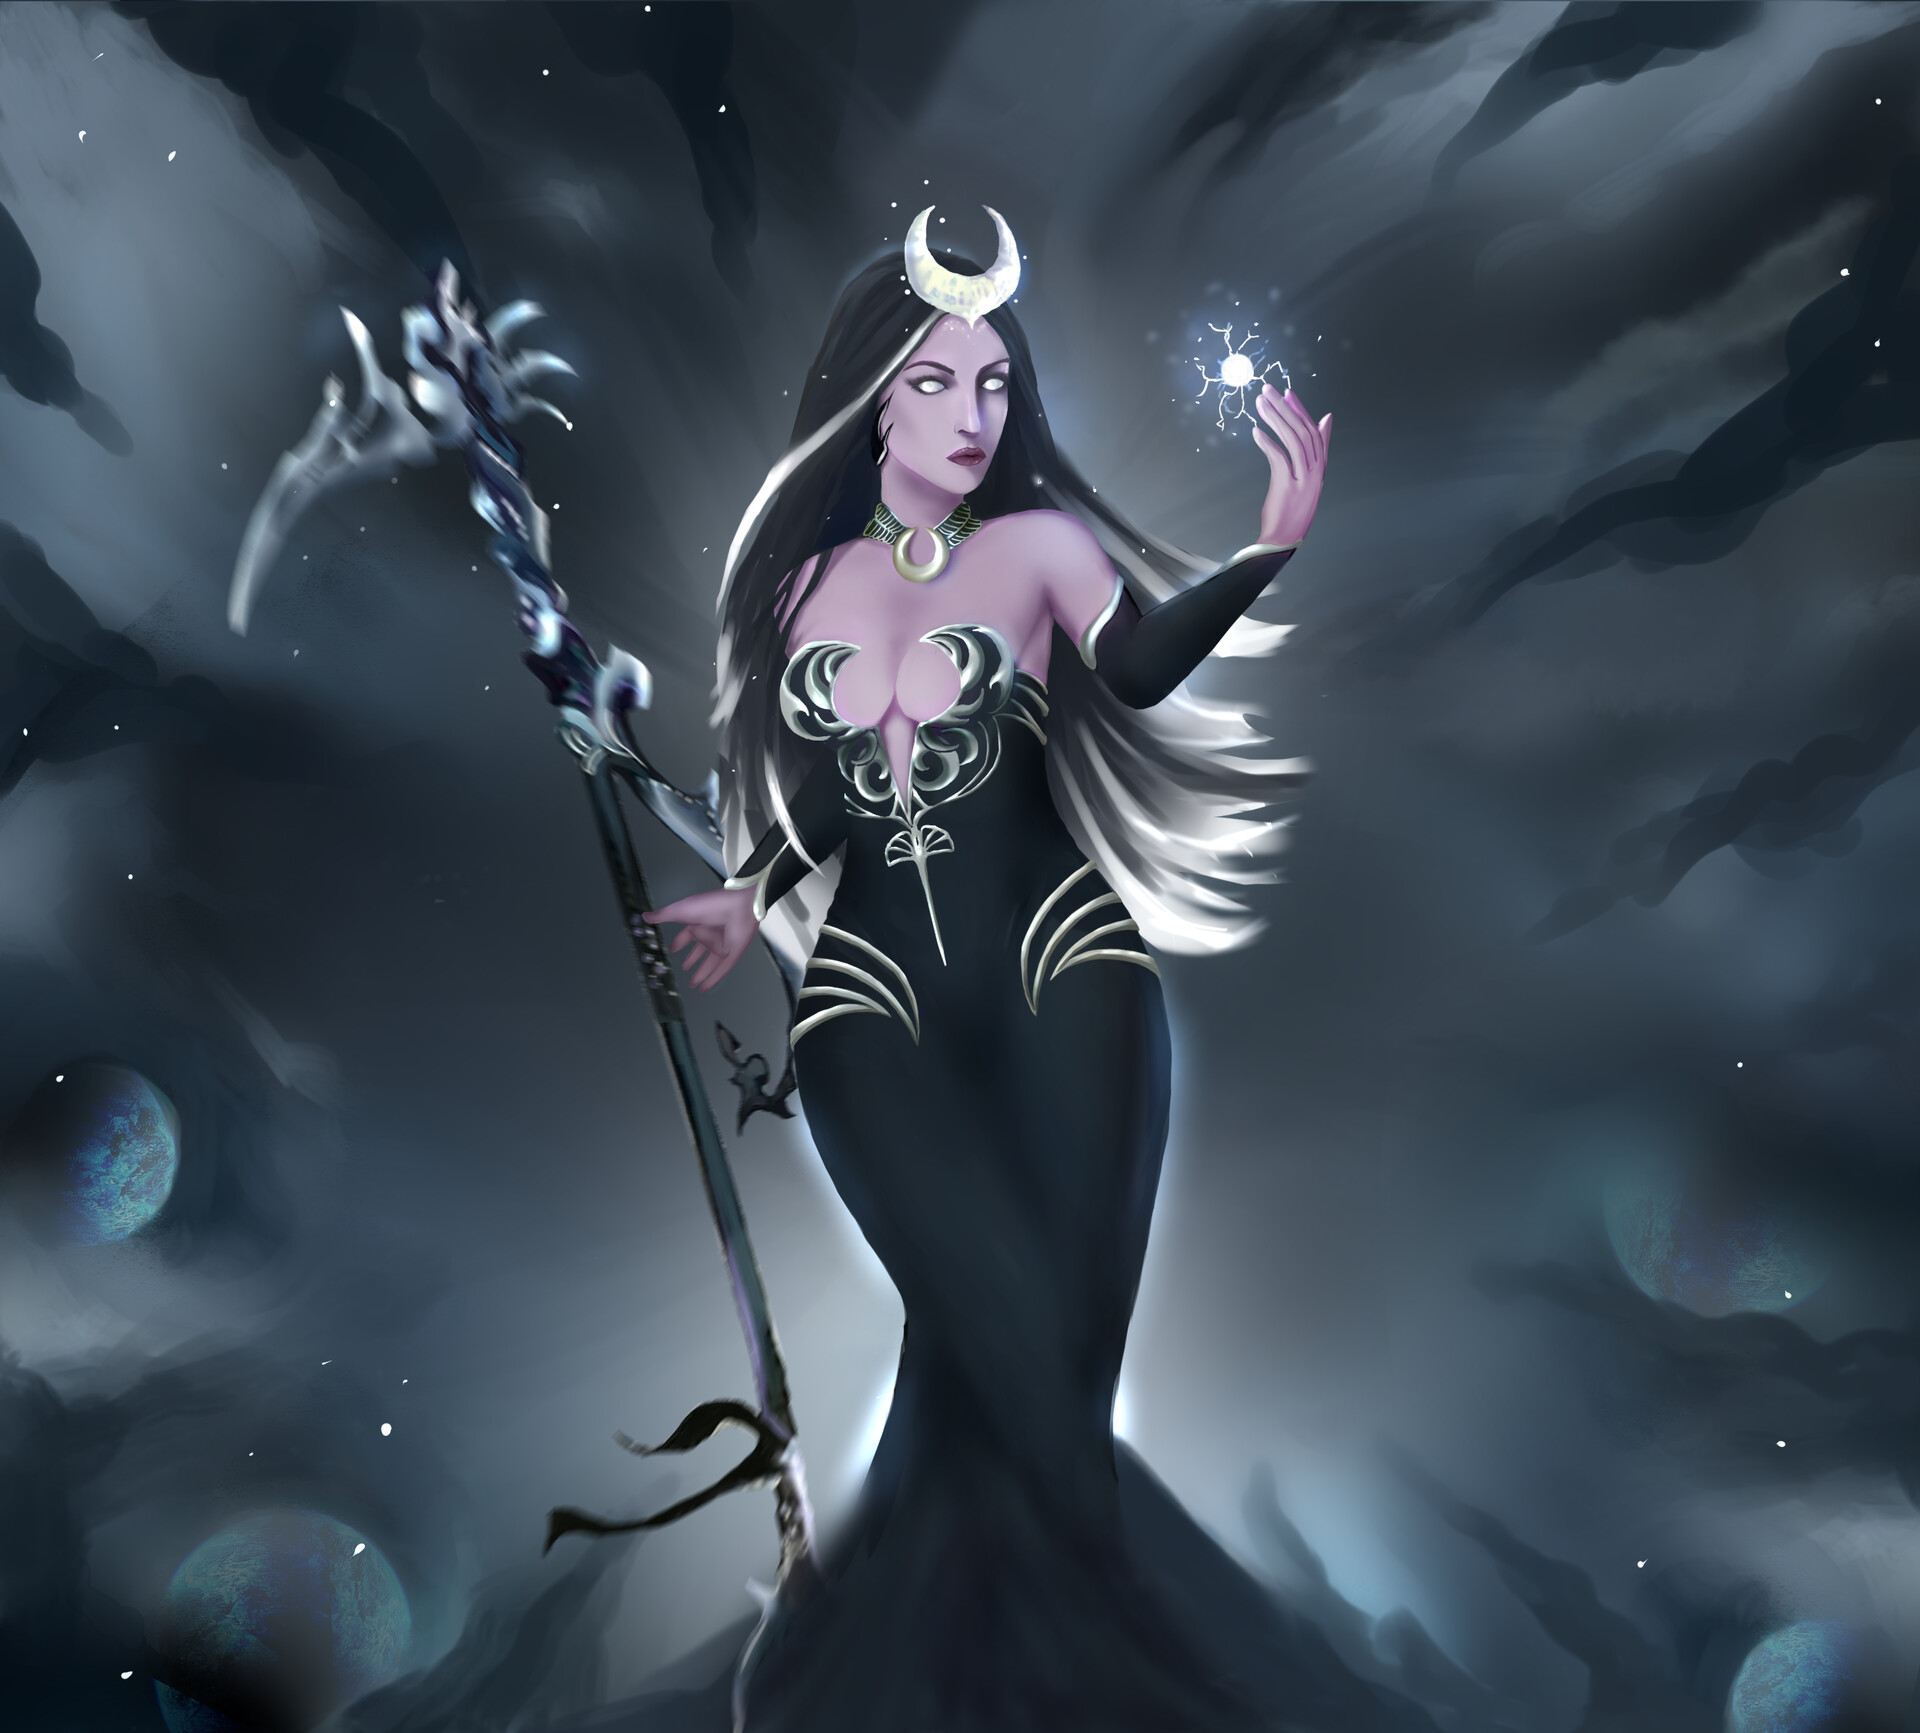 Nyx- The Goddess of night